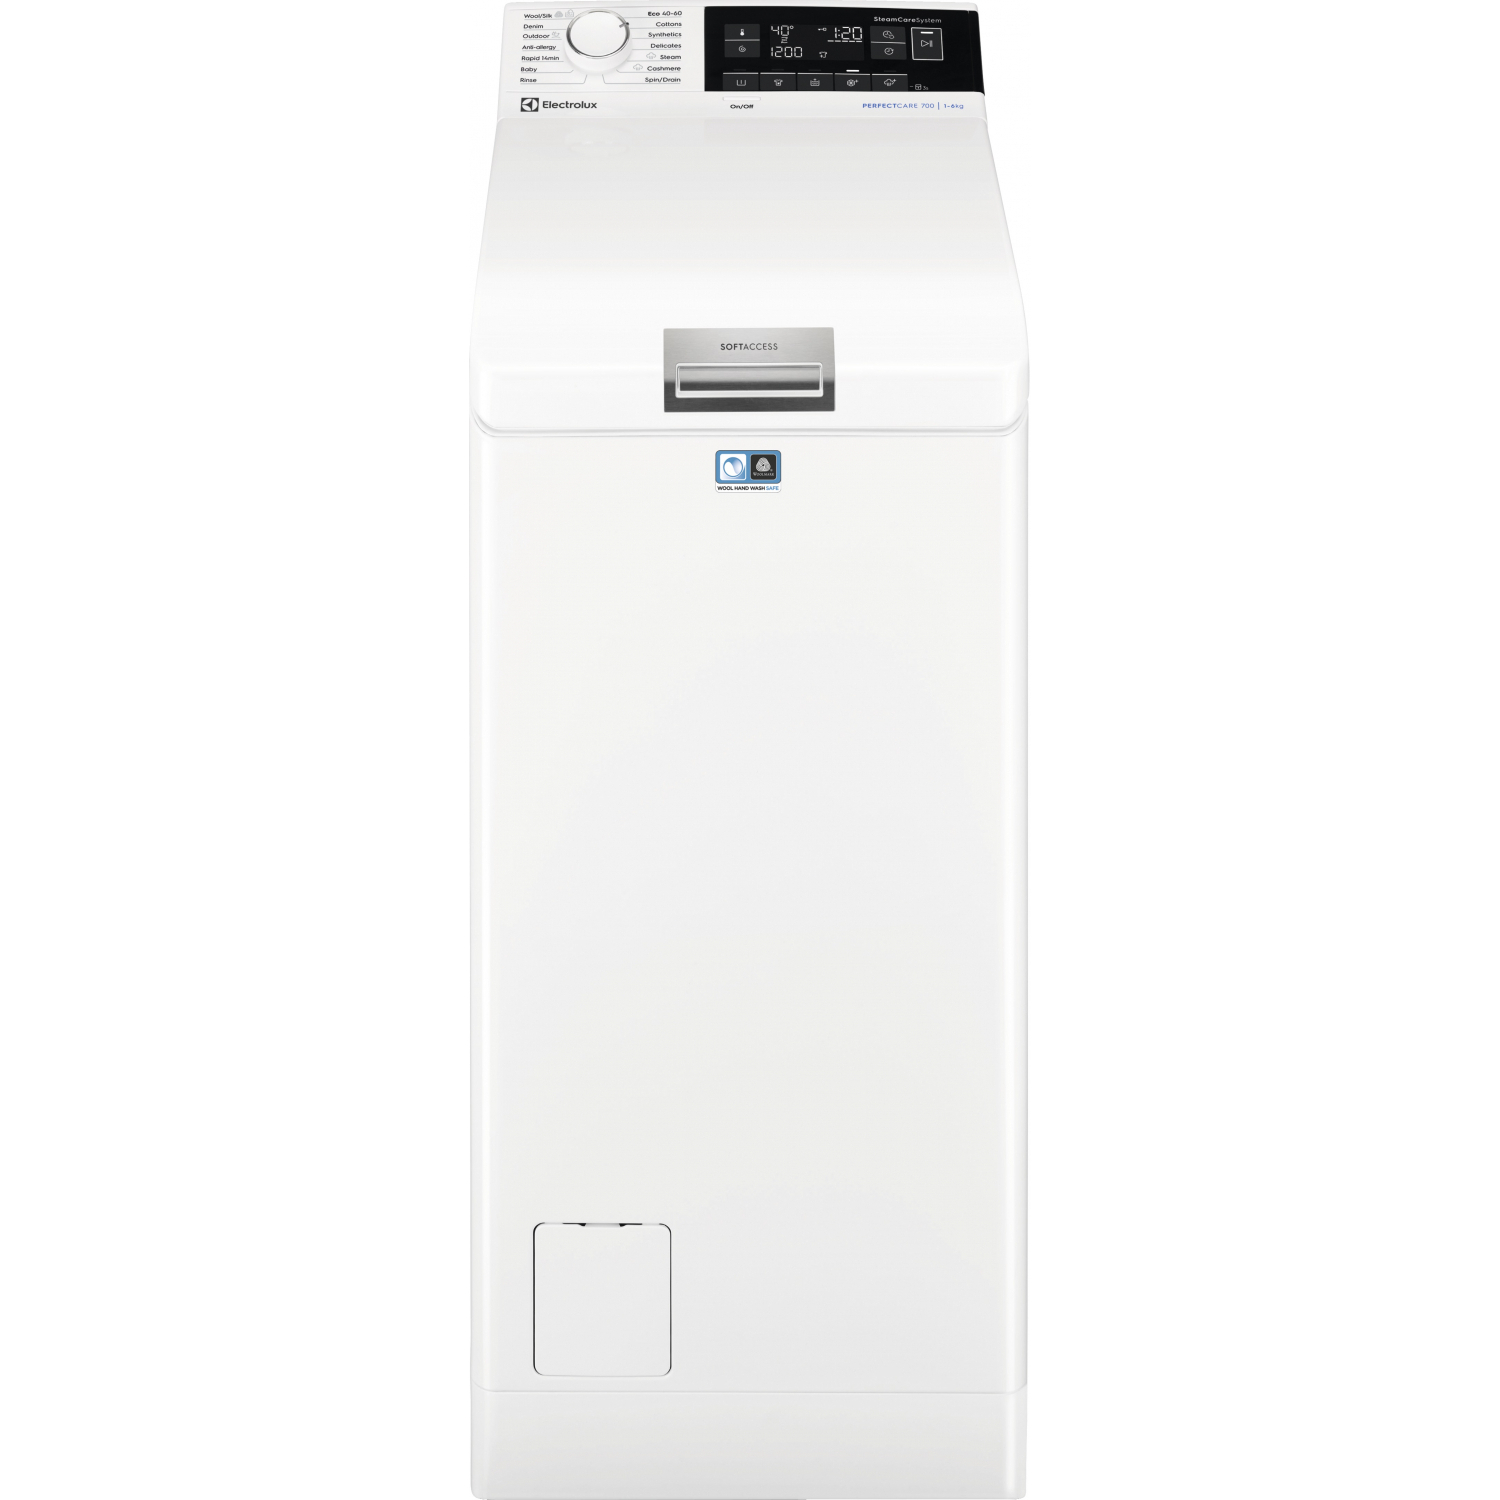 Стиральная машина Electrolux EW7TN3272 белый стиральная машина electrolux ew7f348aw белый